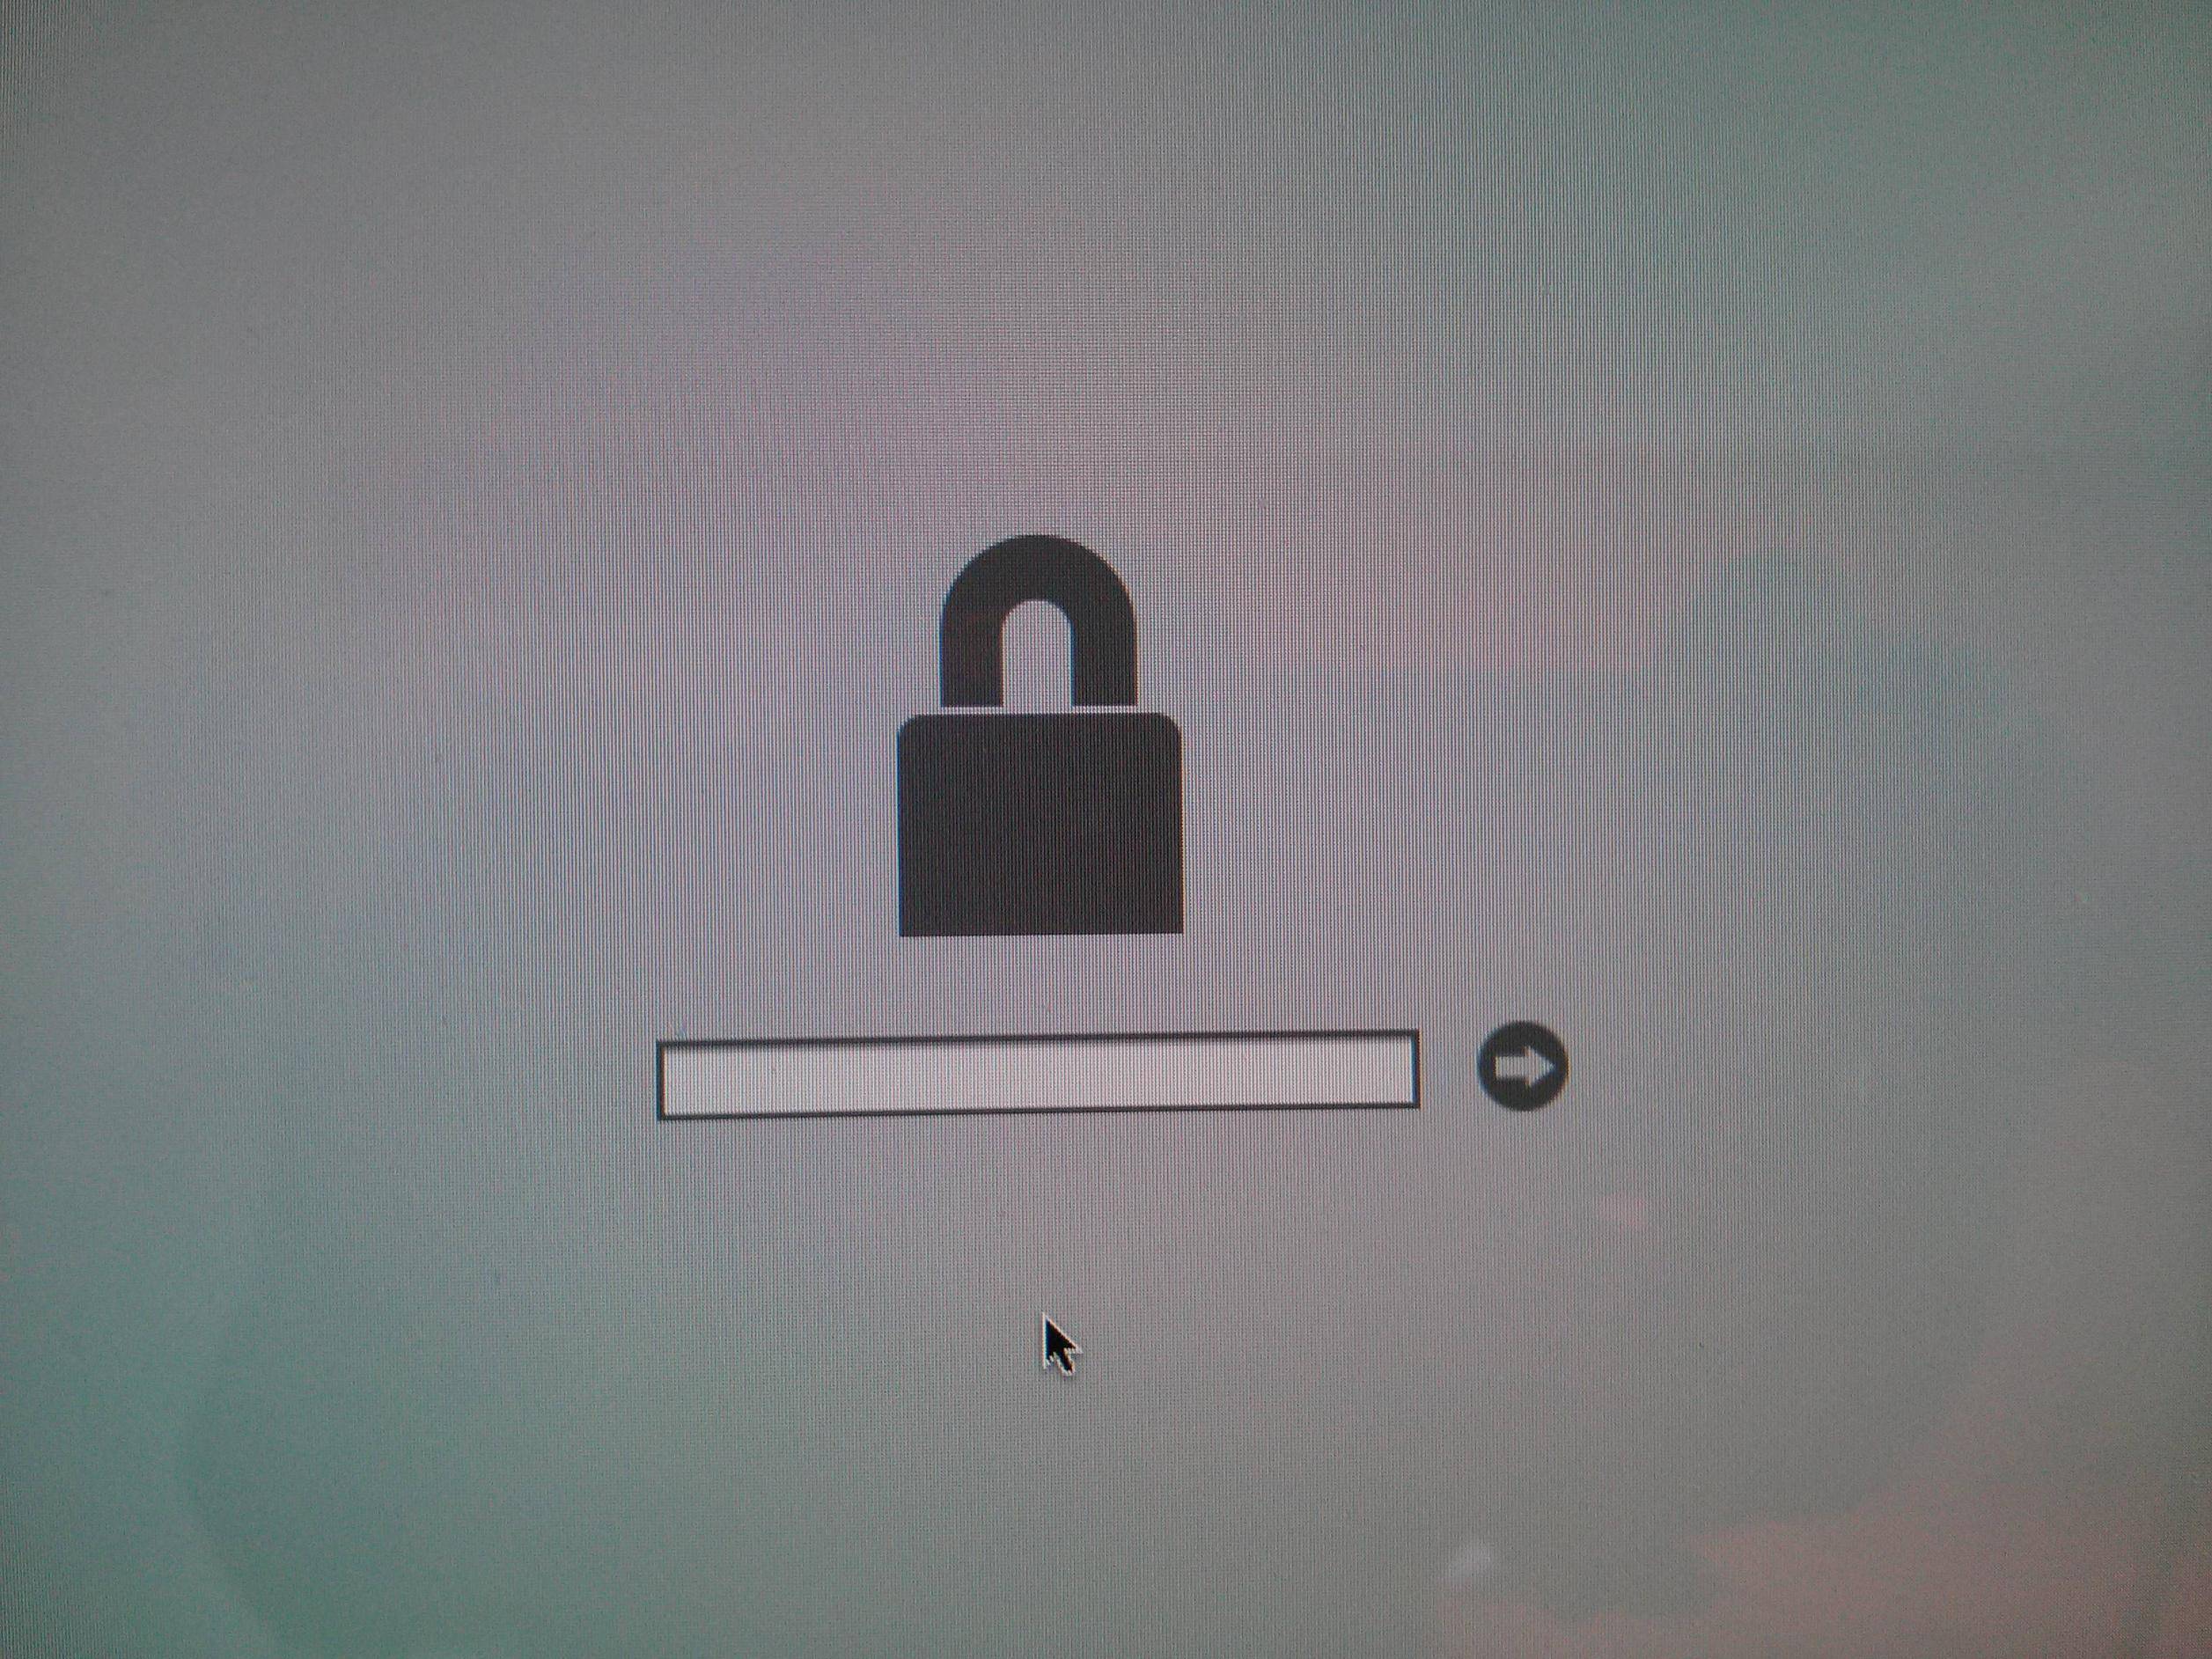 mac os password recovery